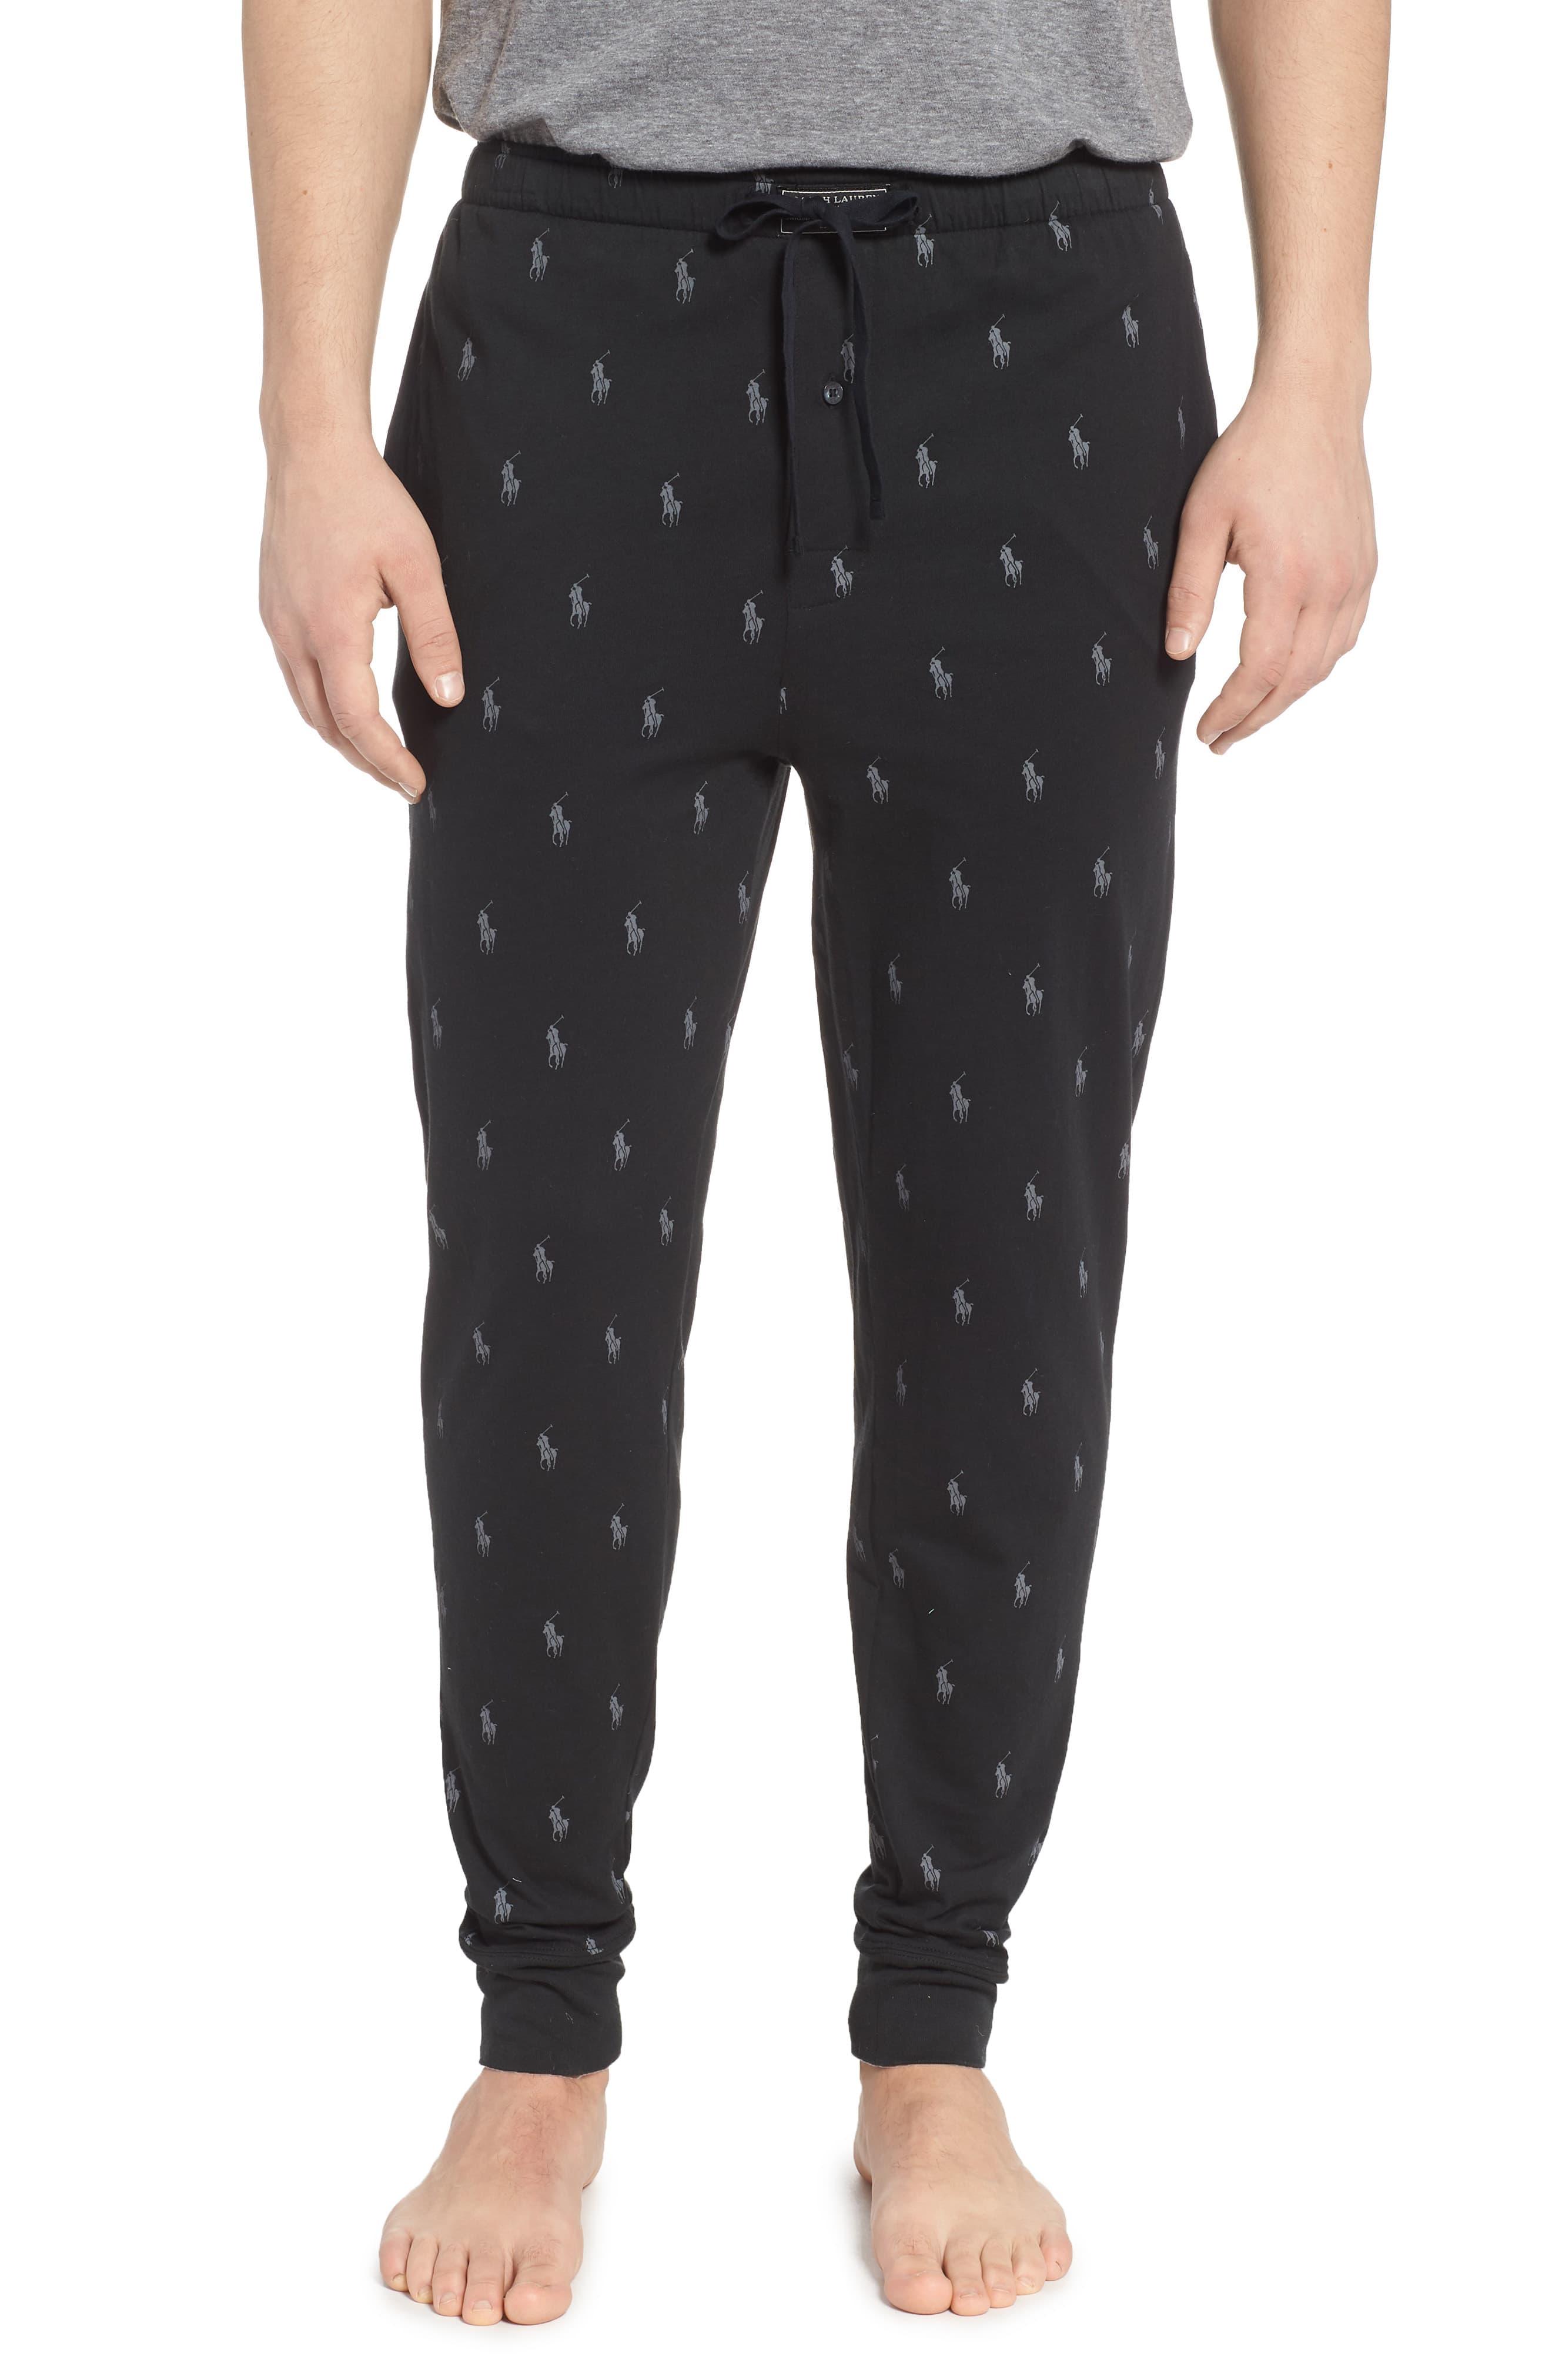 Polo Ralph Lauren Pony Print Pajama Pants in Black for Men - Lyst